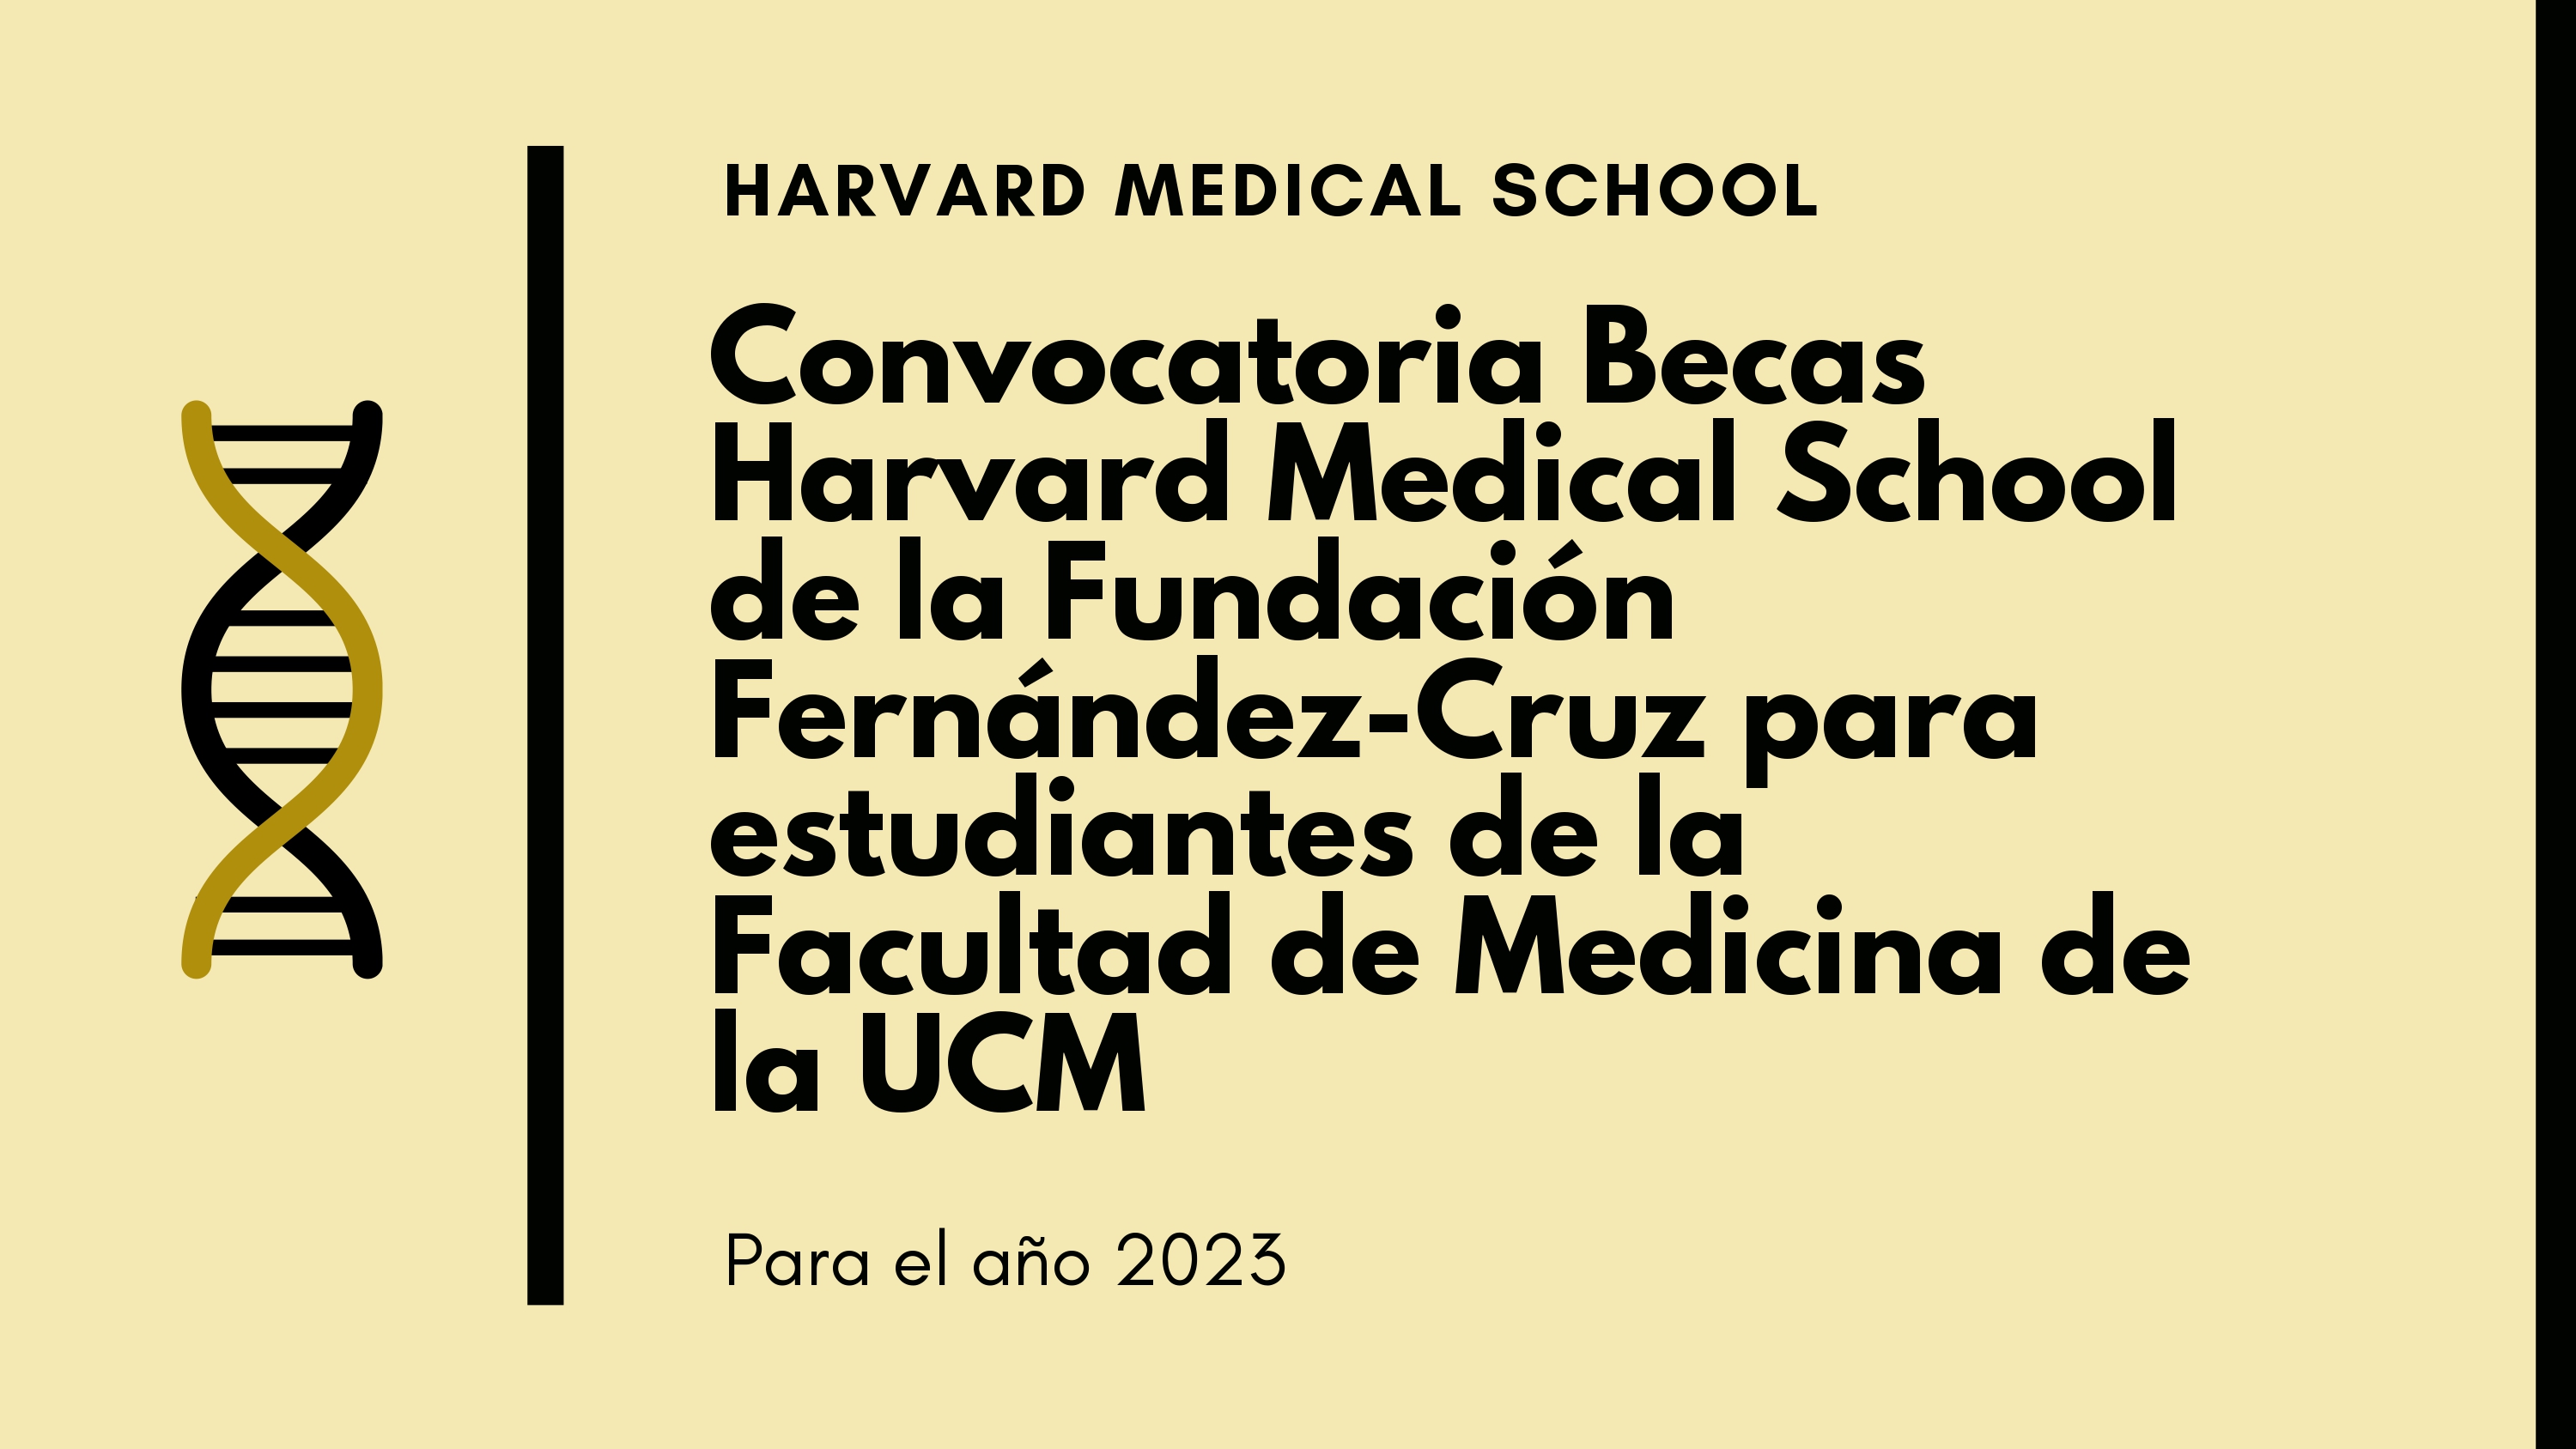 CONVOCATORIA DE BECAS HARVARD MEDICAL SCHOOL - 1